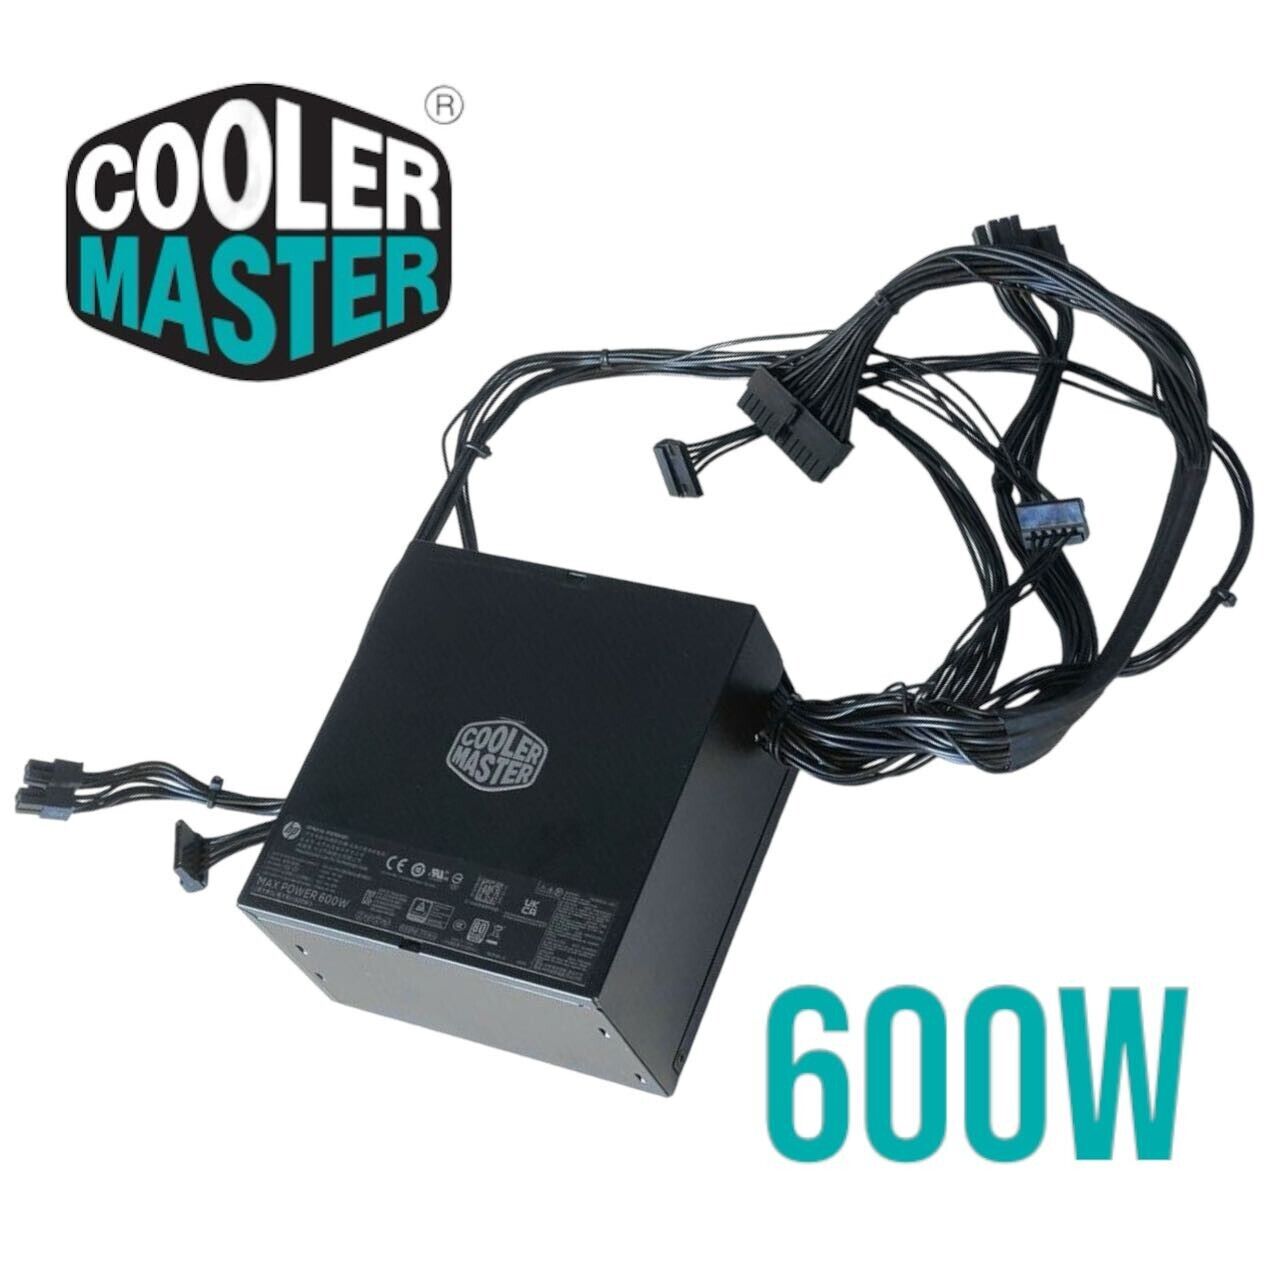 Cooler Master 600W Computer Power Supply 80Plus Gold Certified ATX PSU